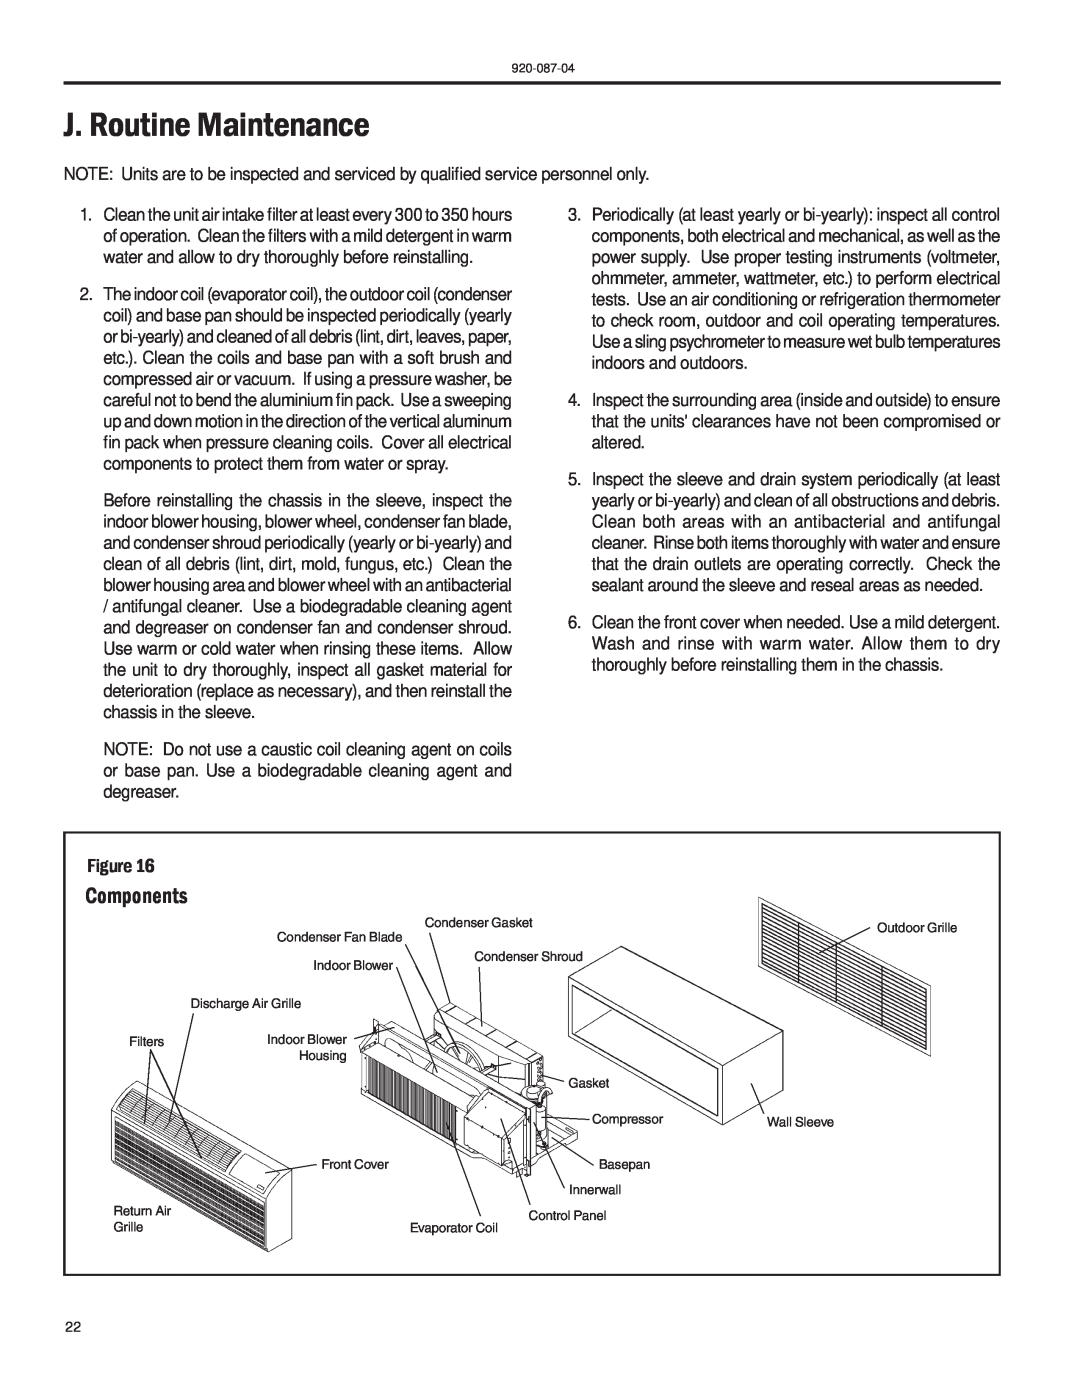 Friedrich HEAT PUMPS manual J. Routine Maintenance, Components 